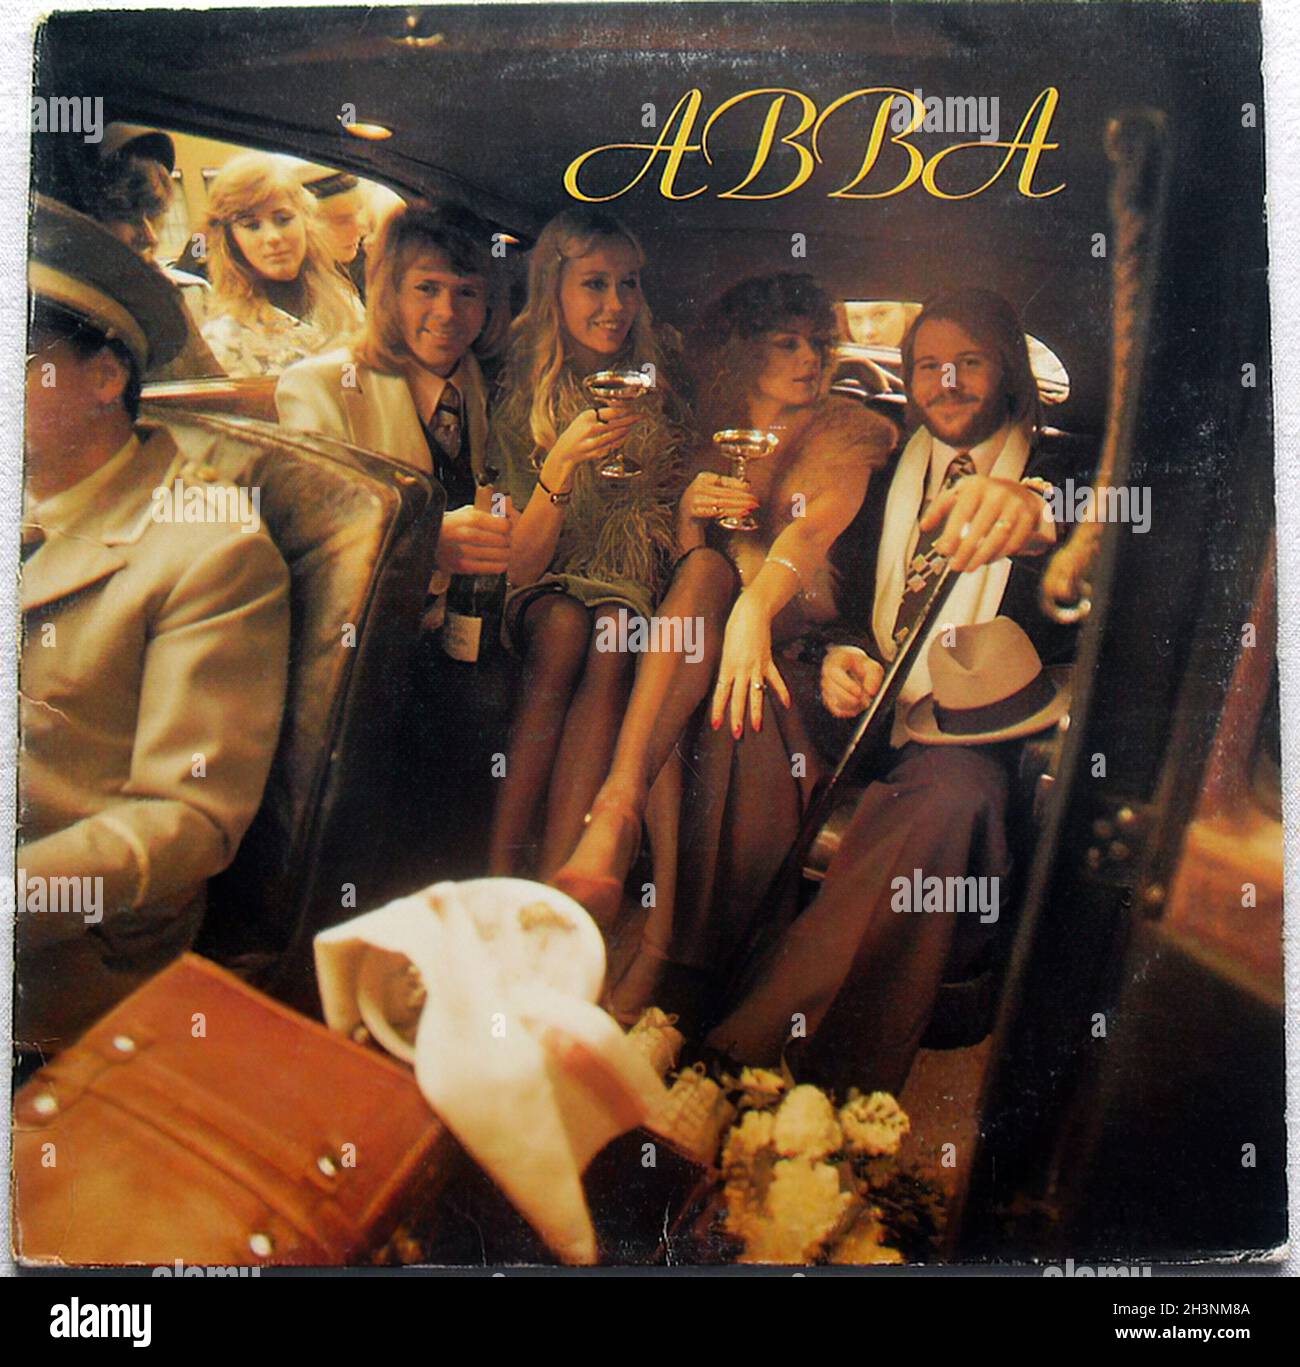 1975 Abba LP Record Album Sleeve Vinyl 70er Jahre Stockfotografie - Alamy